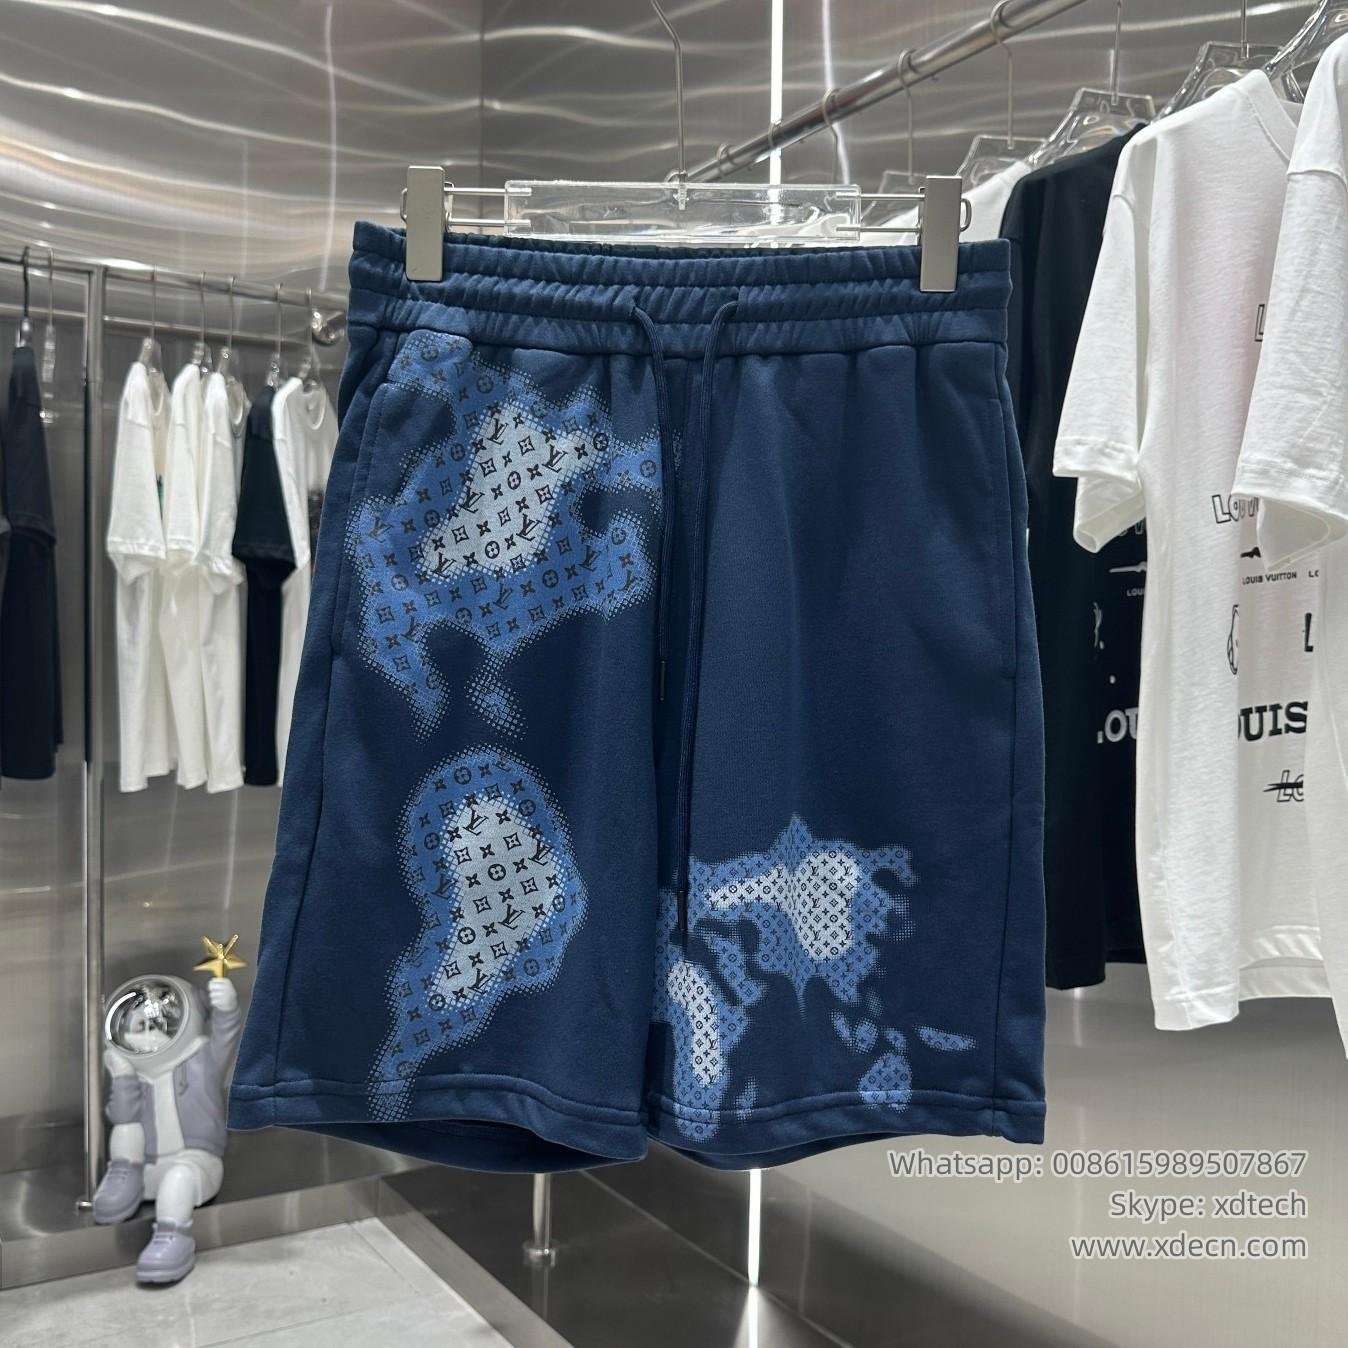 Louis Vuitton Shorts